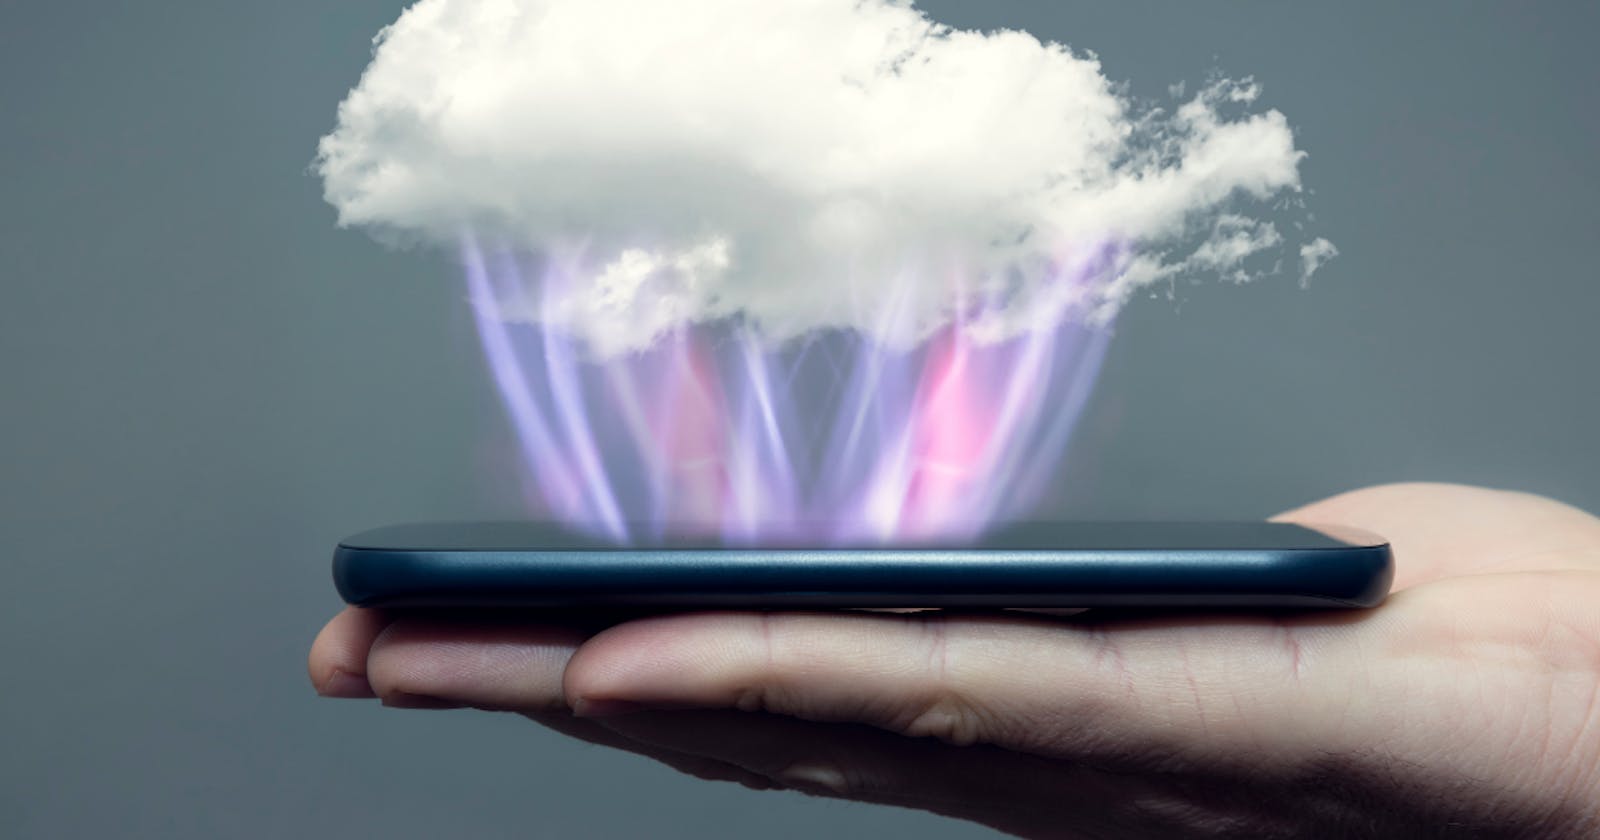 Why Cloud Testing for Digital Transformation?